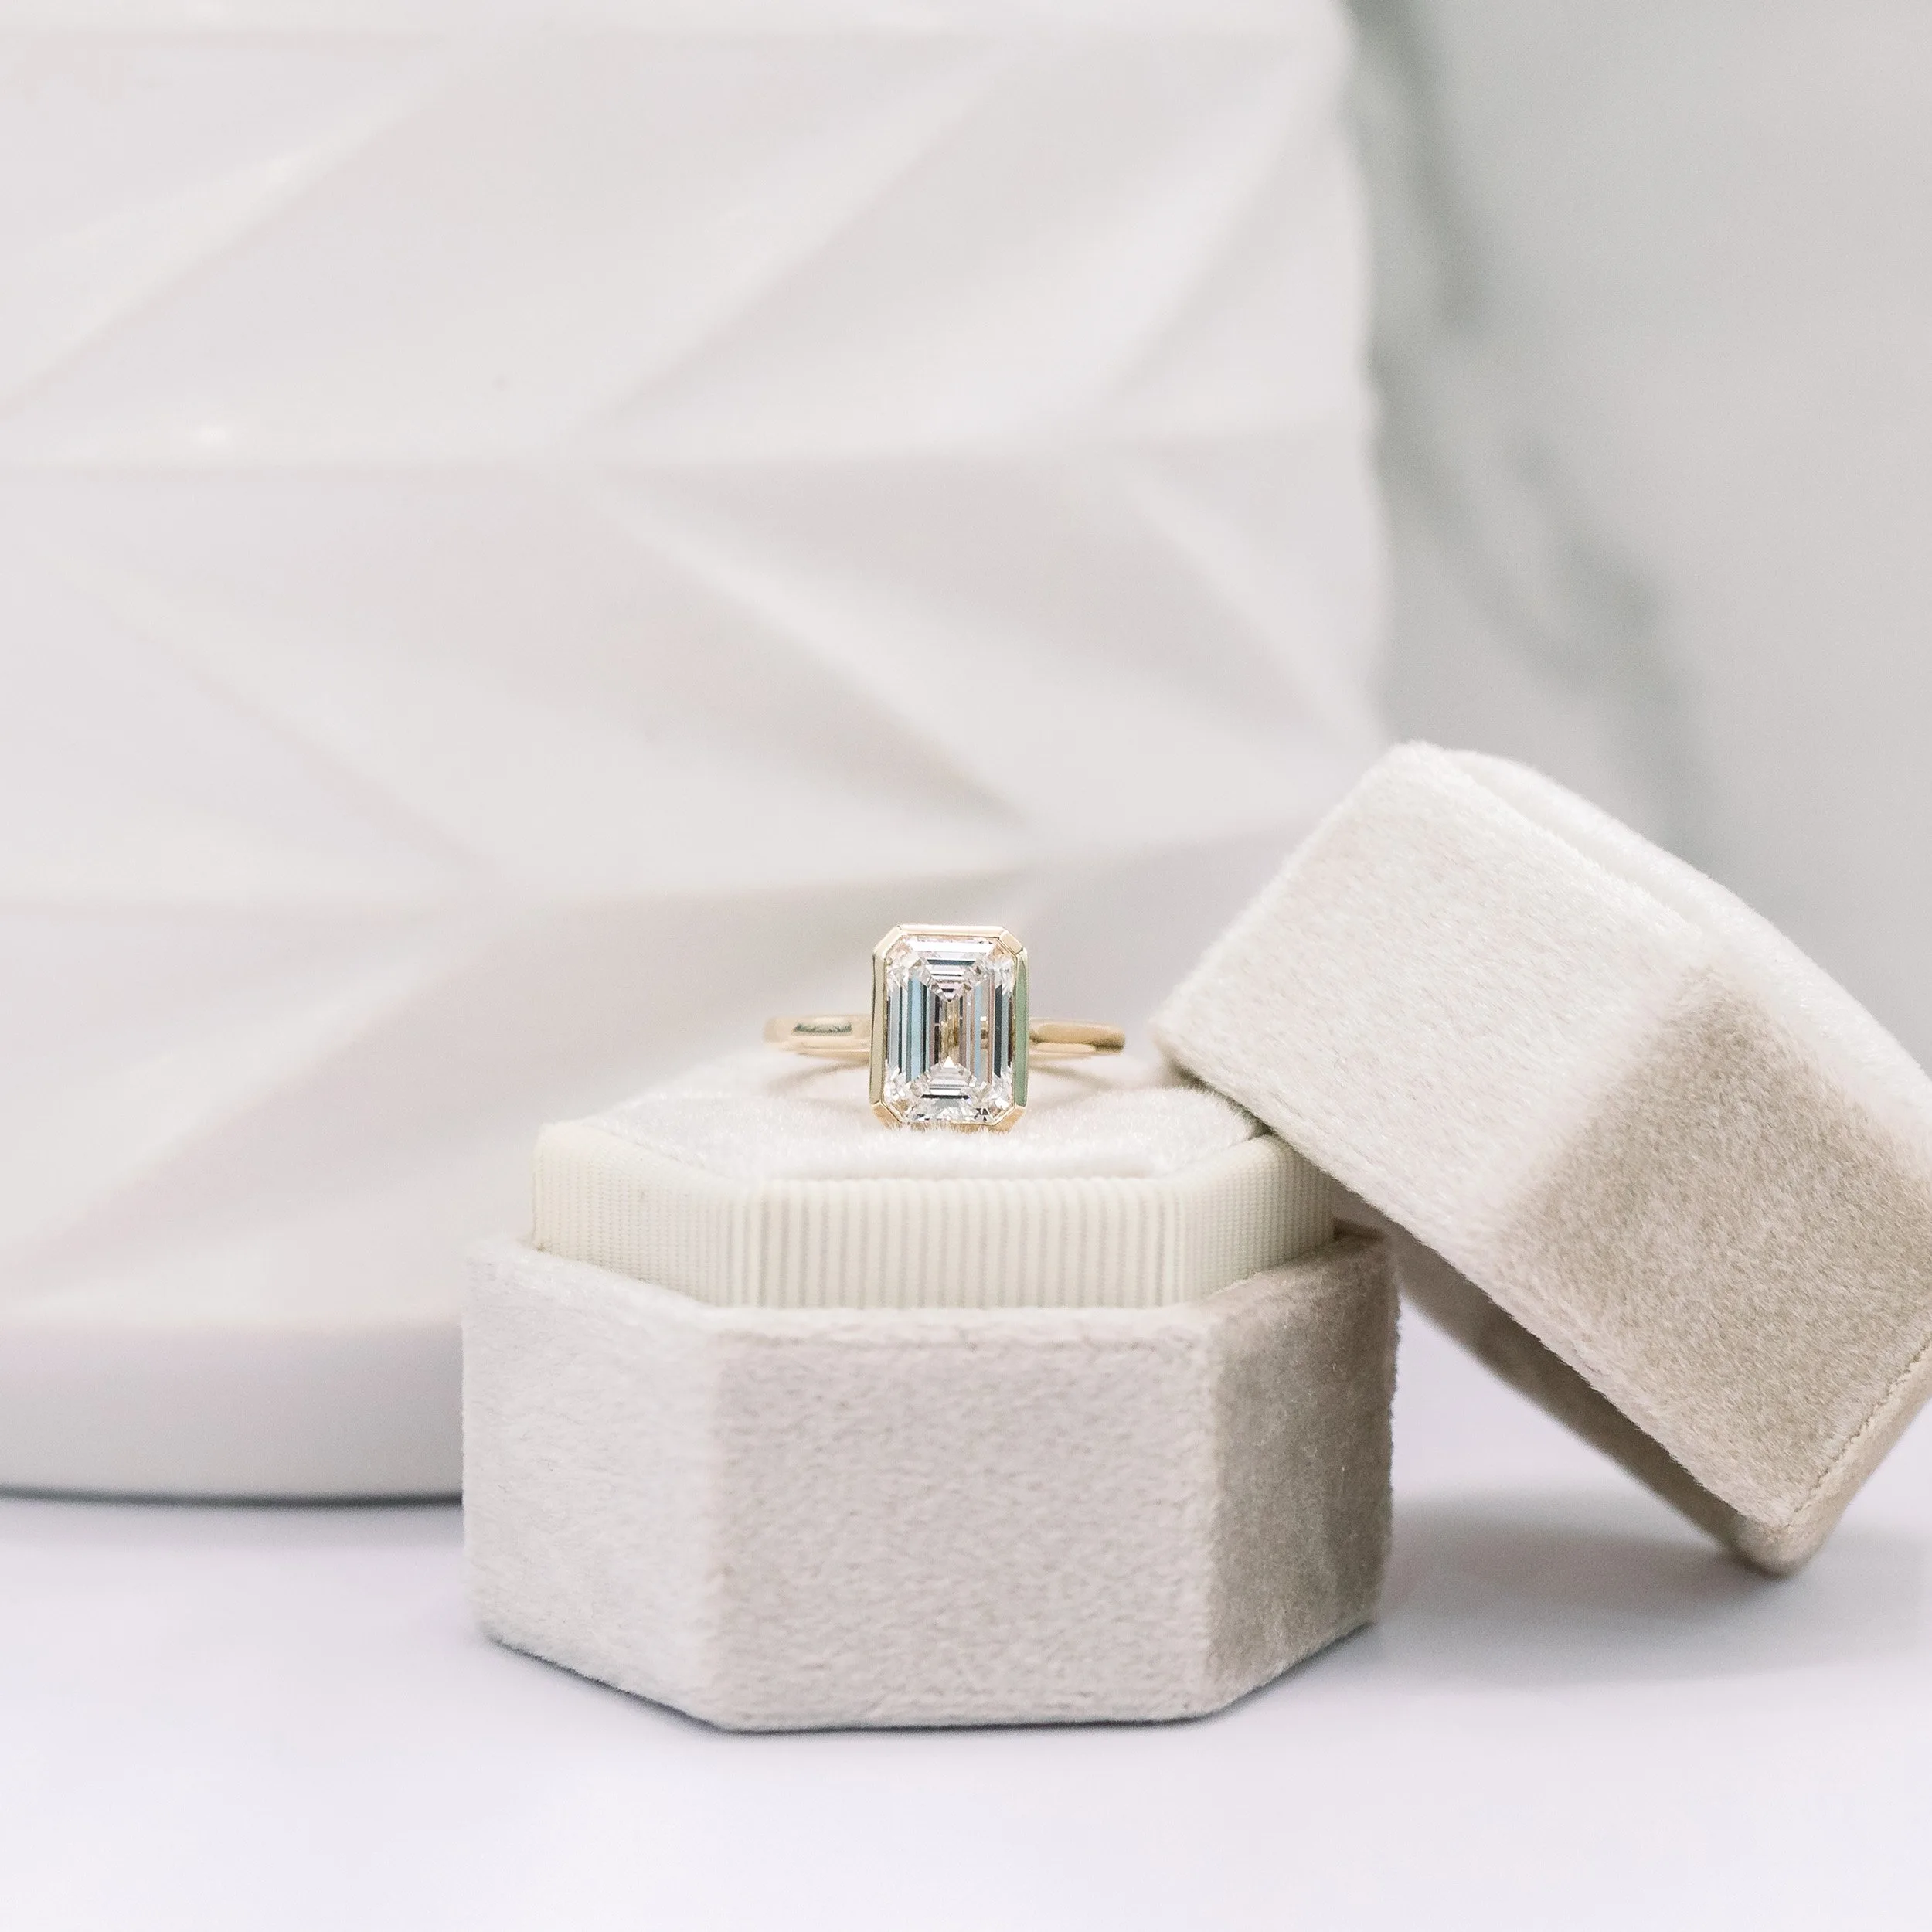 2.75ct emerald cut lab diamond in 14k yellow gold bezel solitaire engagement ring ada diamonds design ad 148 macro